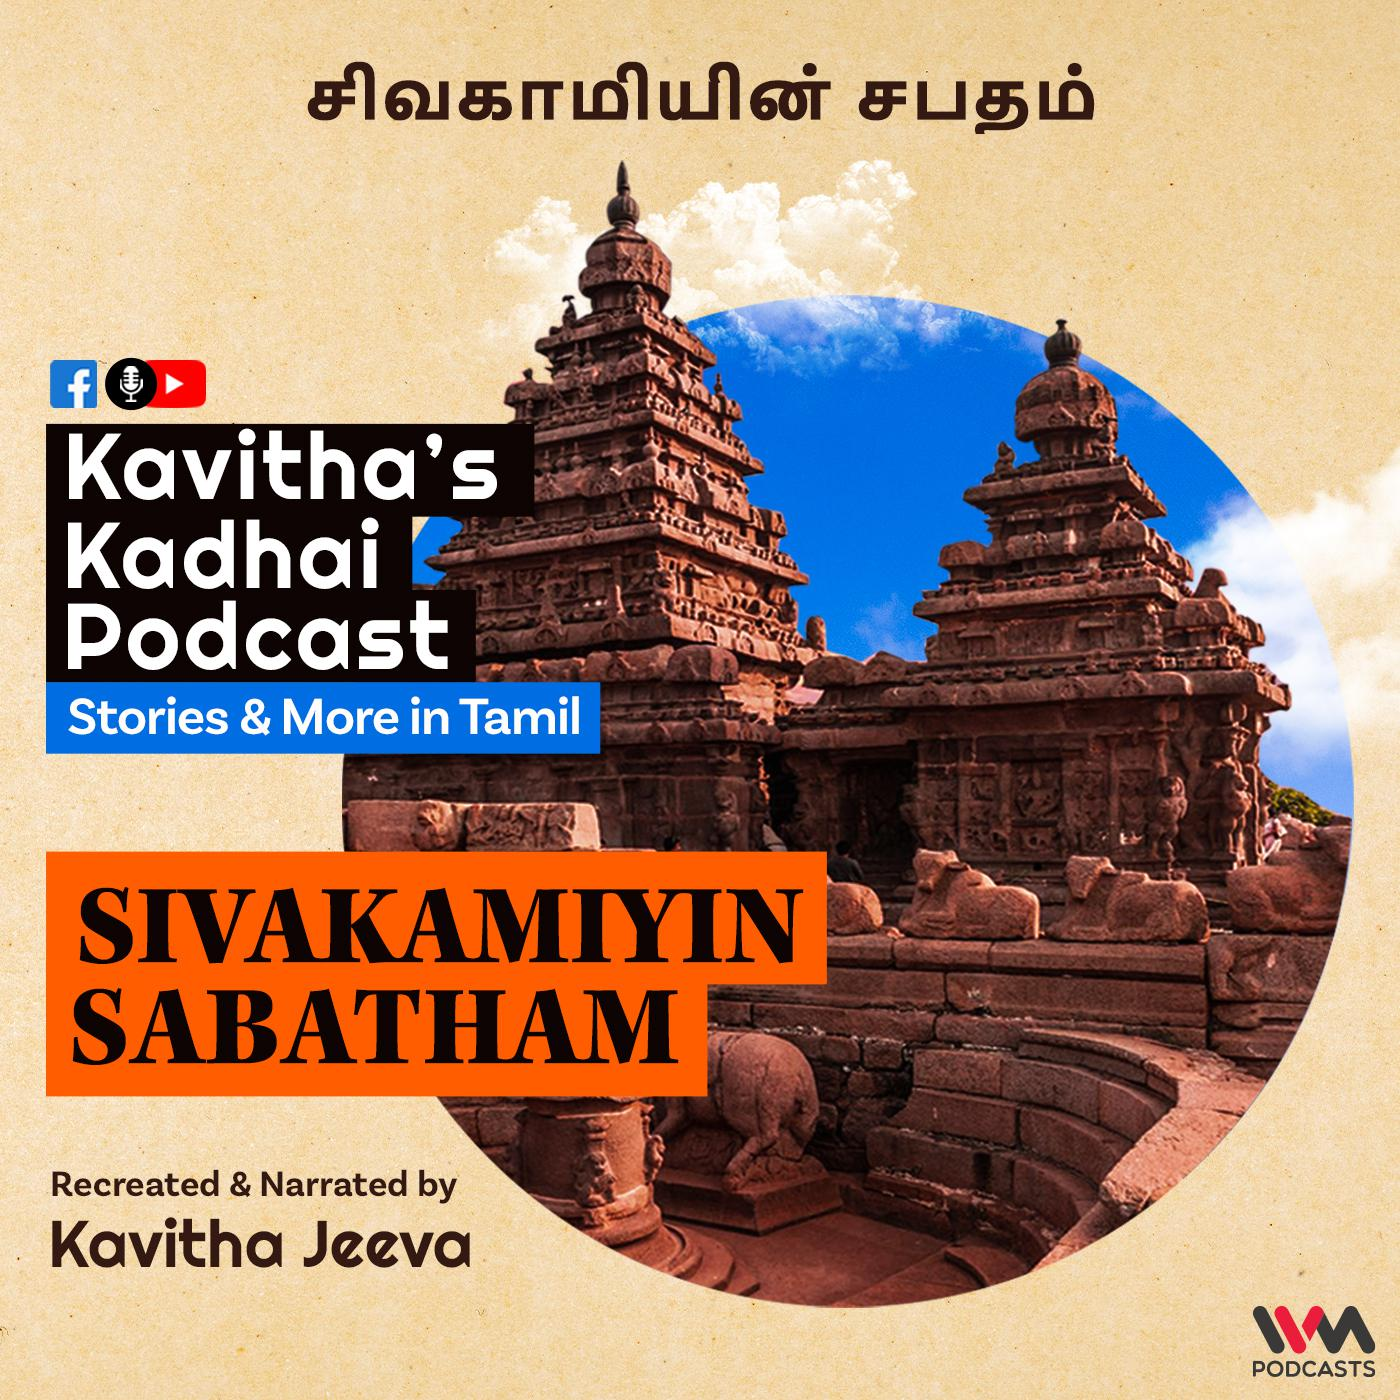 KadhaiPodcast's Sivakamiyin Sabatham with Kavitha Jeeva - Episode #116